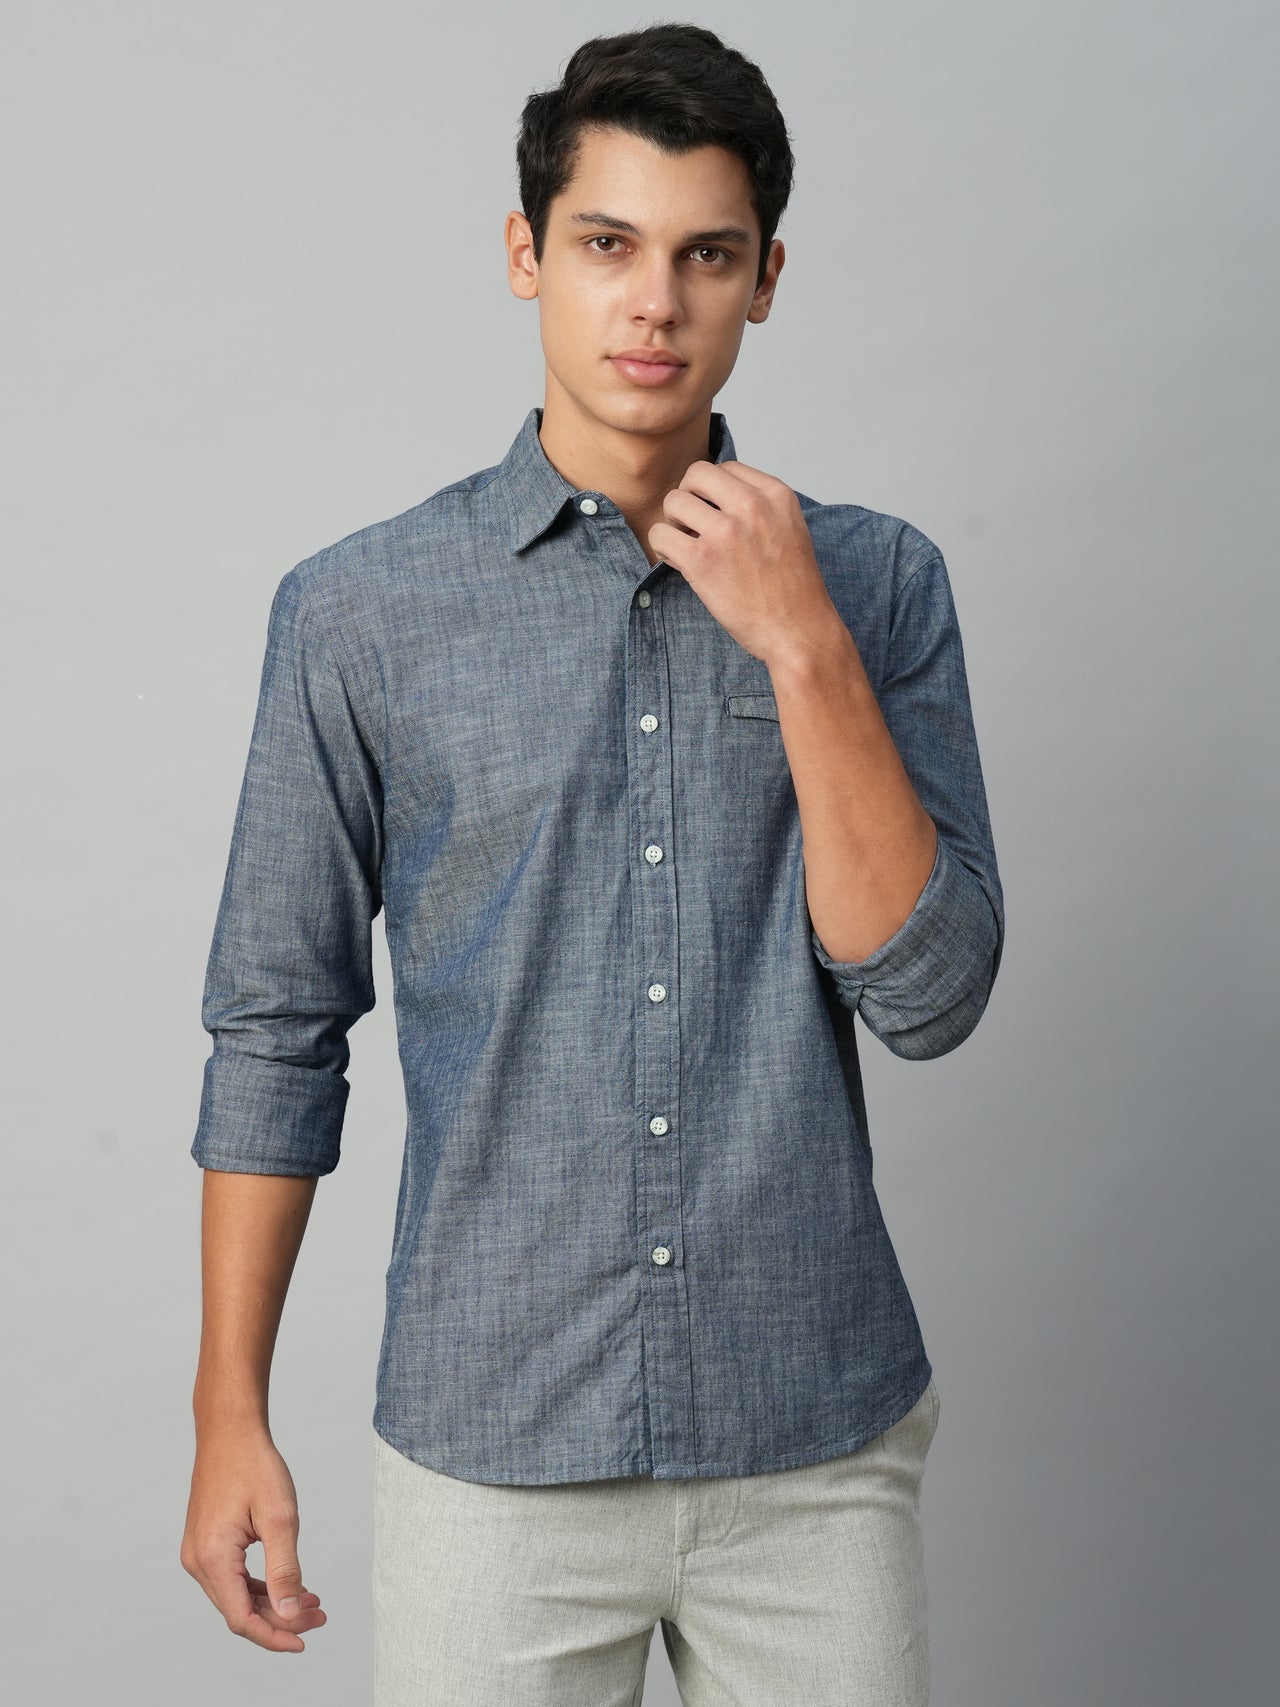 Men's Blue Cotton Regular Fit Shirts